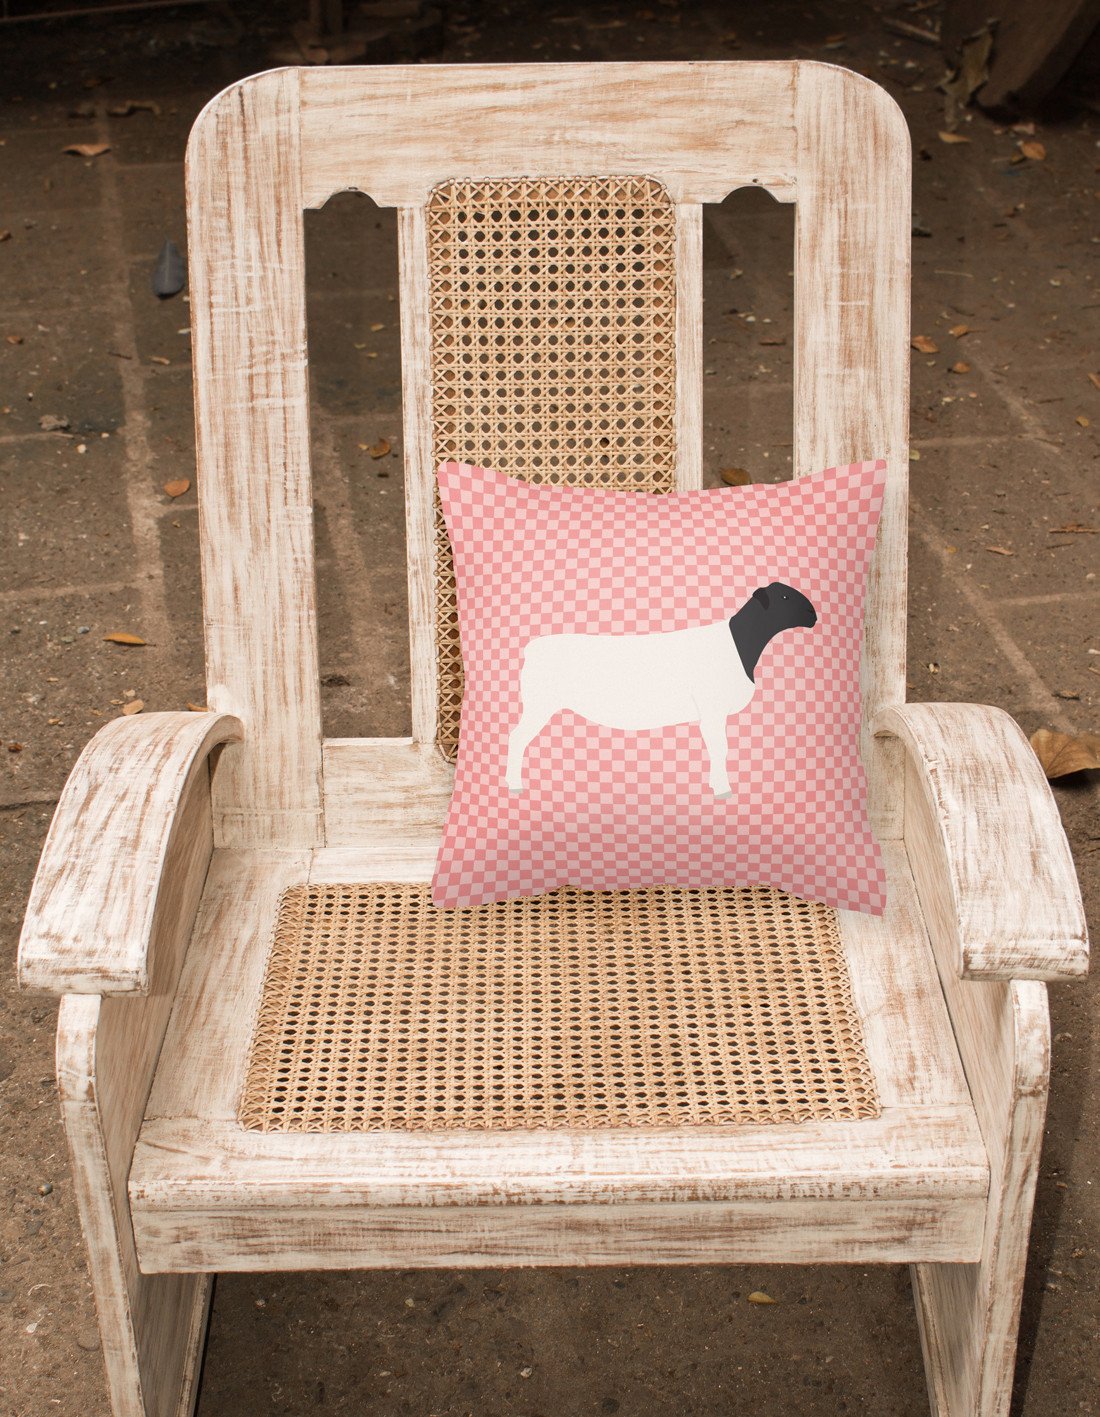 Dorper Sheep Pink Check Fabric Decorative Pillow BB7978PW1818 by Caroline's Treasures